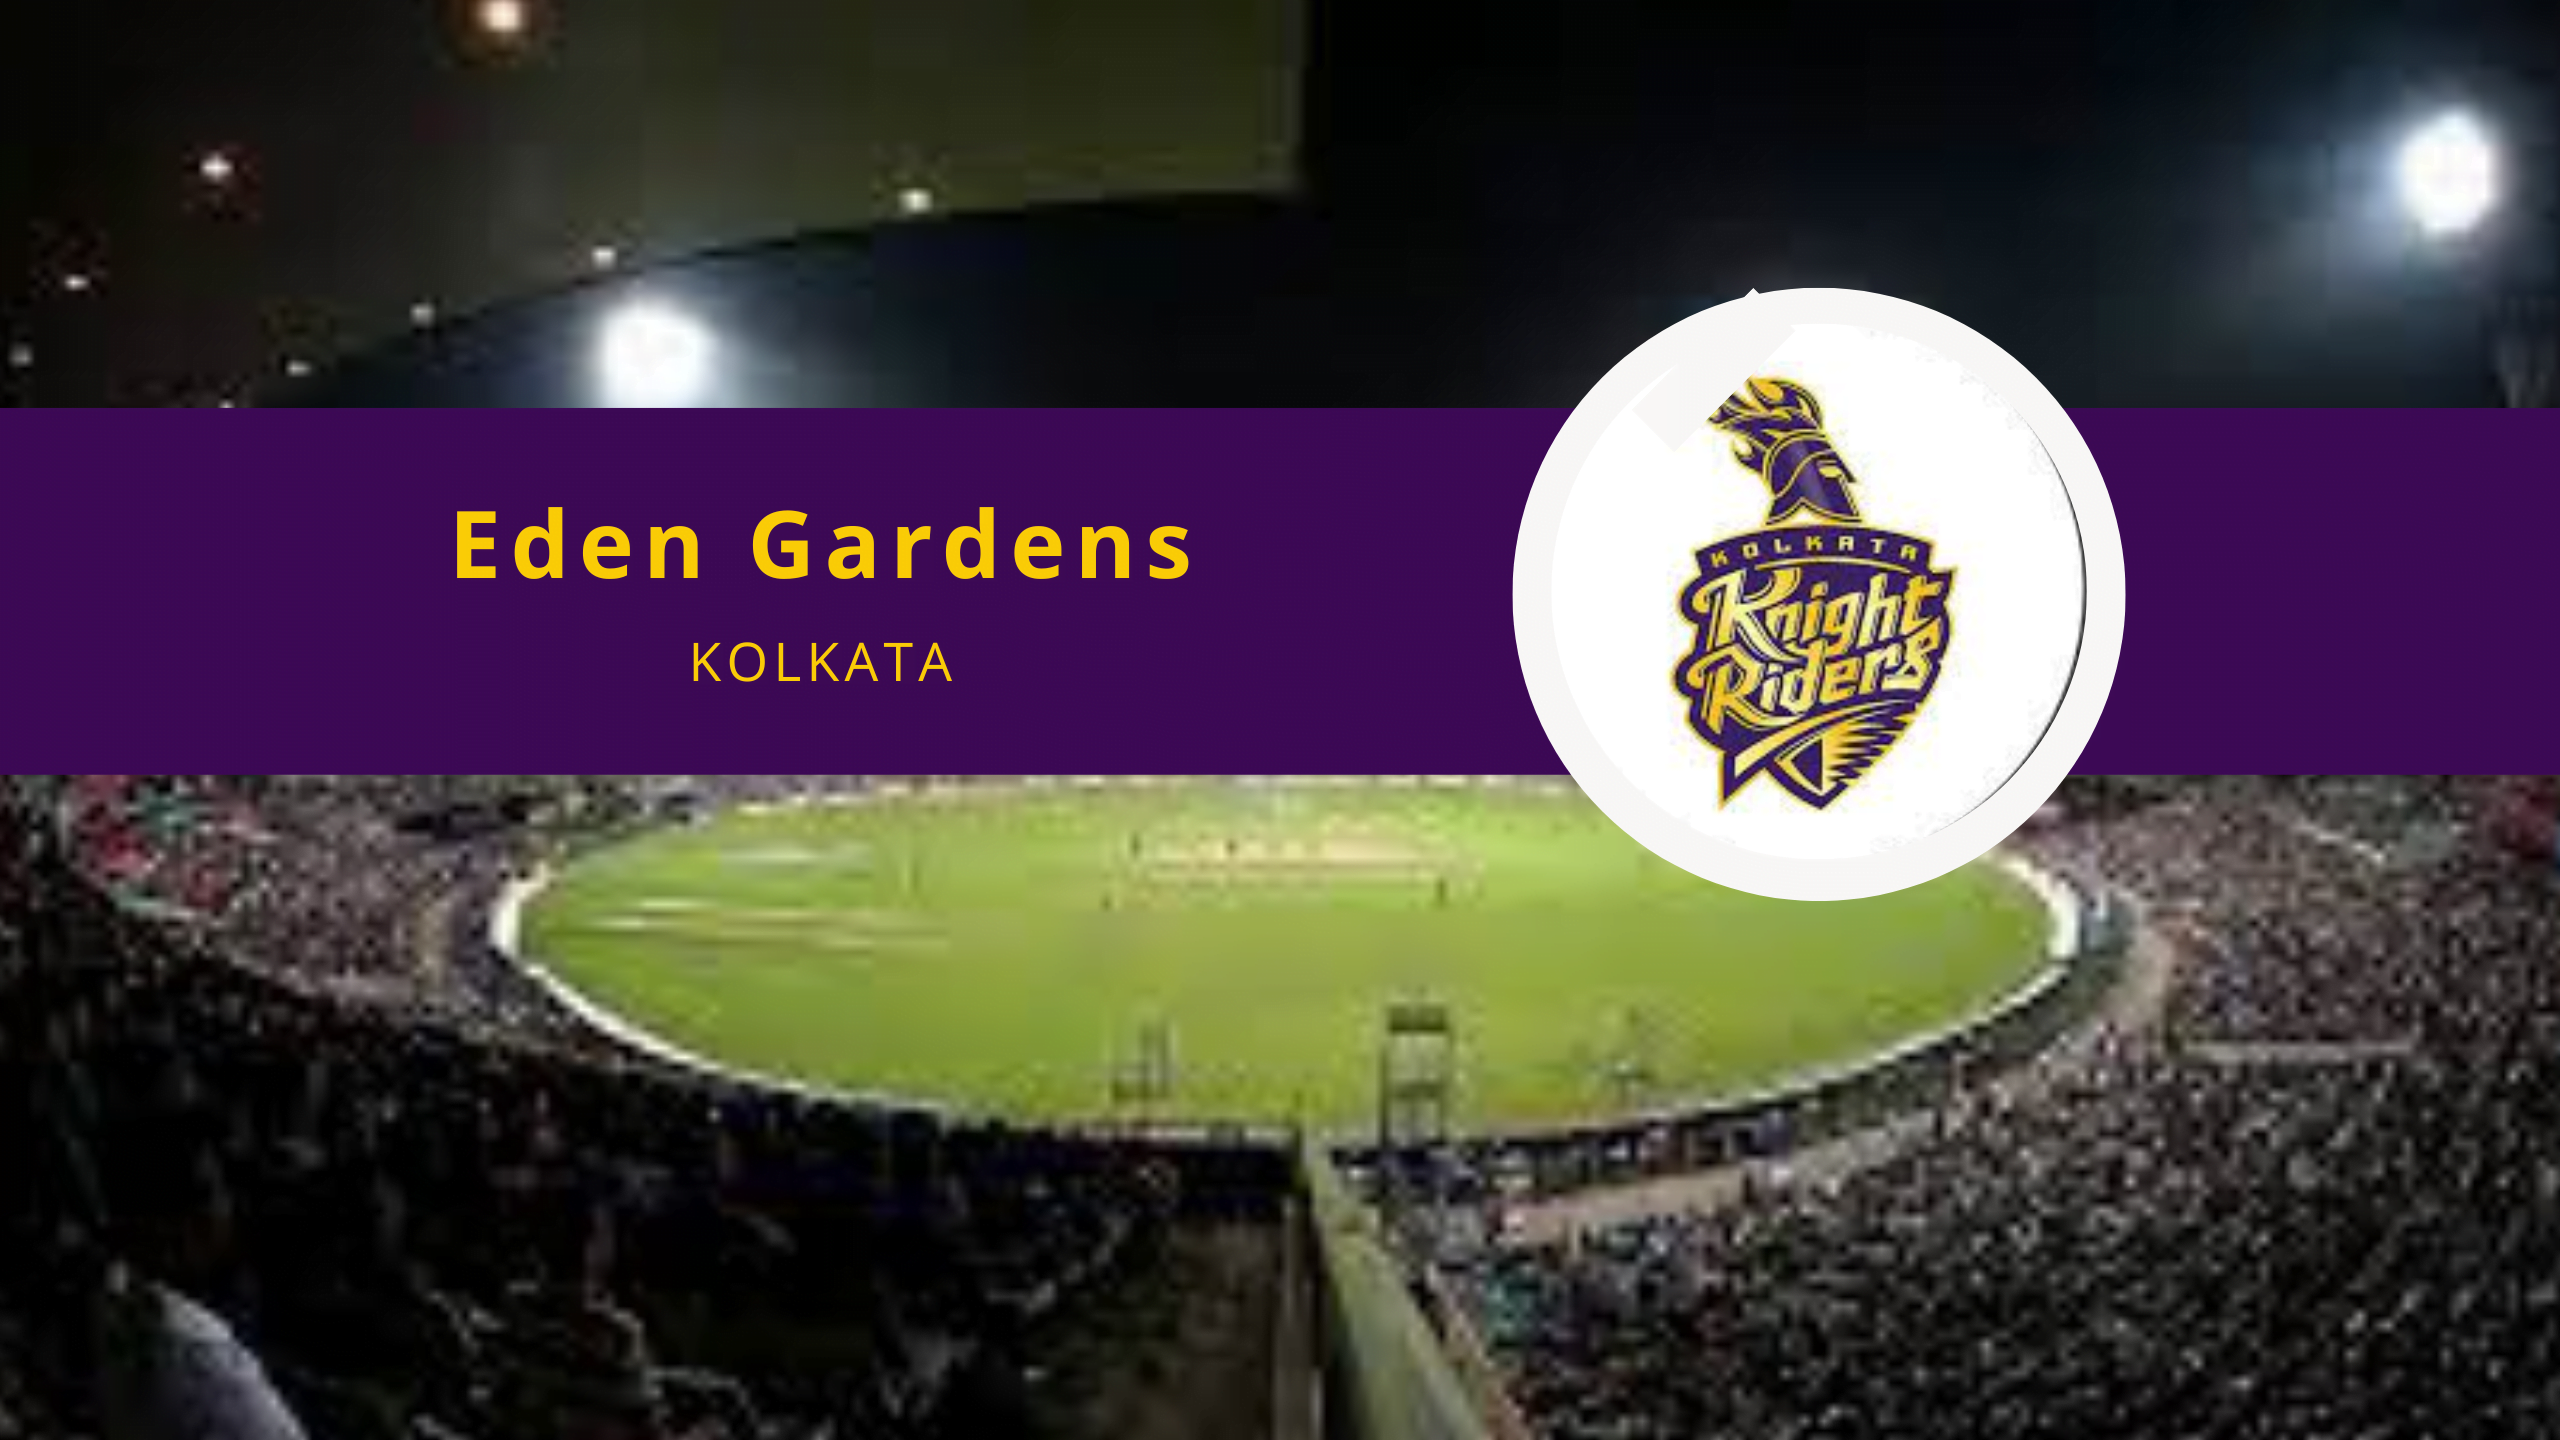 2023 TATA IPL T20 Eden Gardens, Kolkata, pitch report, matches, tickets, KKR team